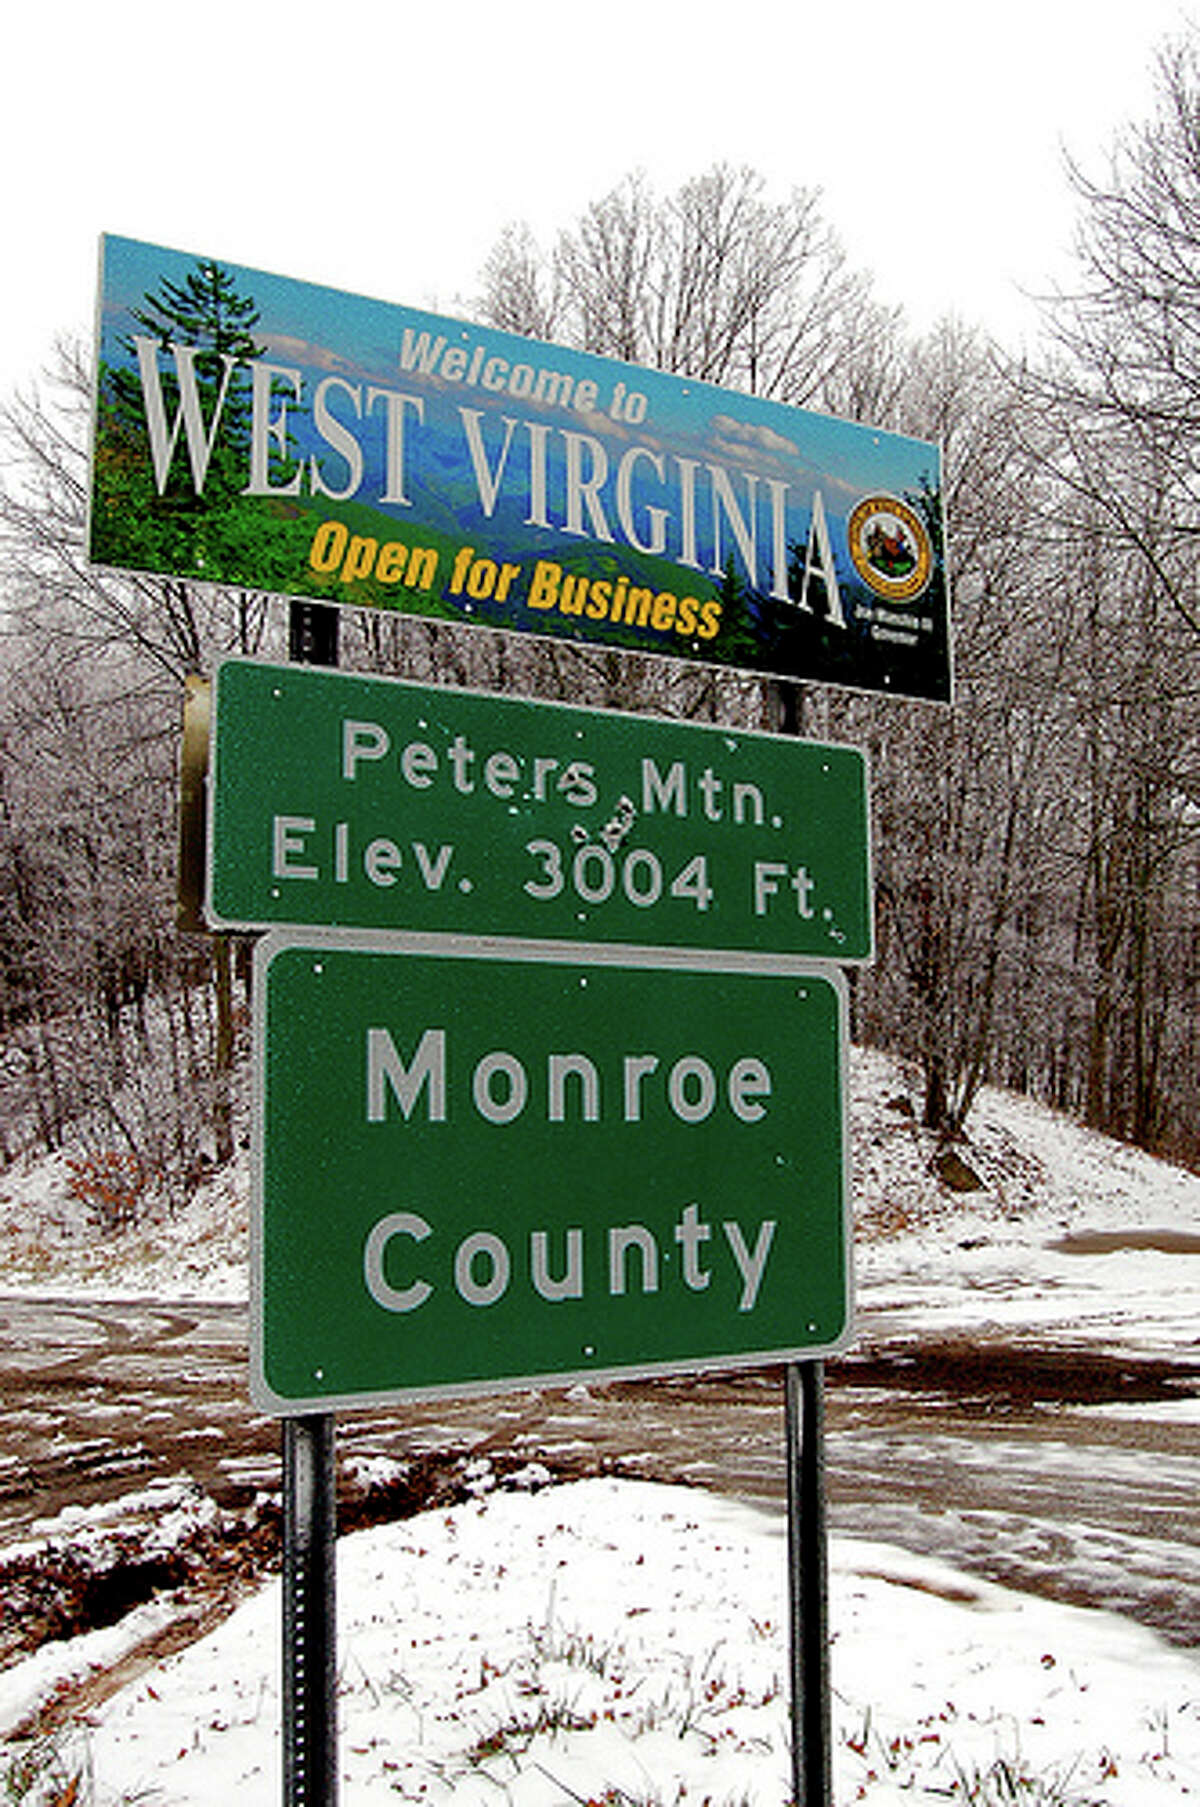 WORST: West Virginia (41.5%)